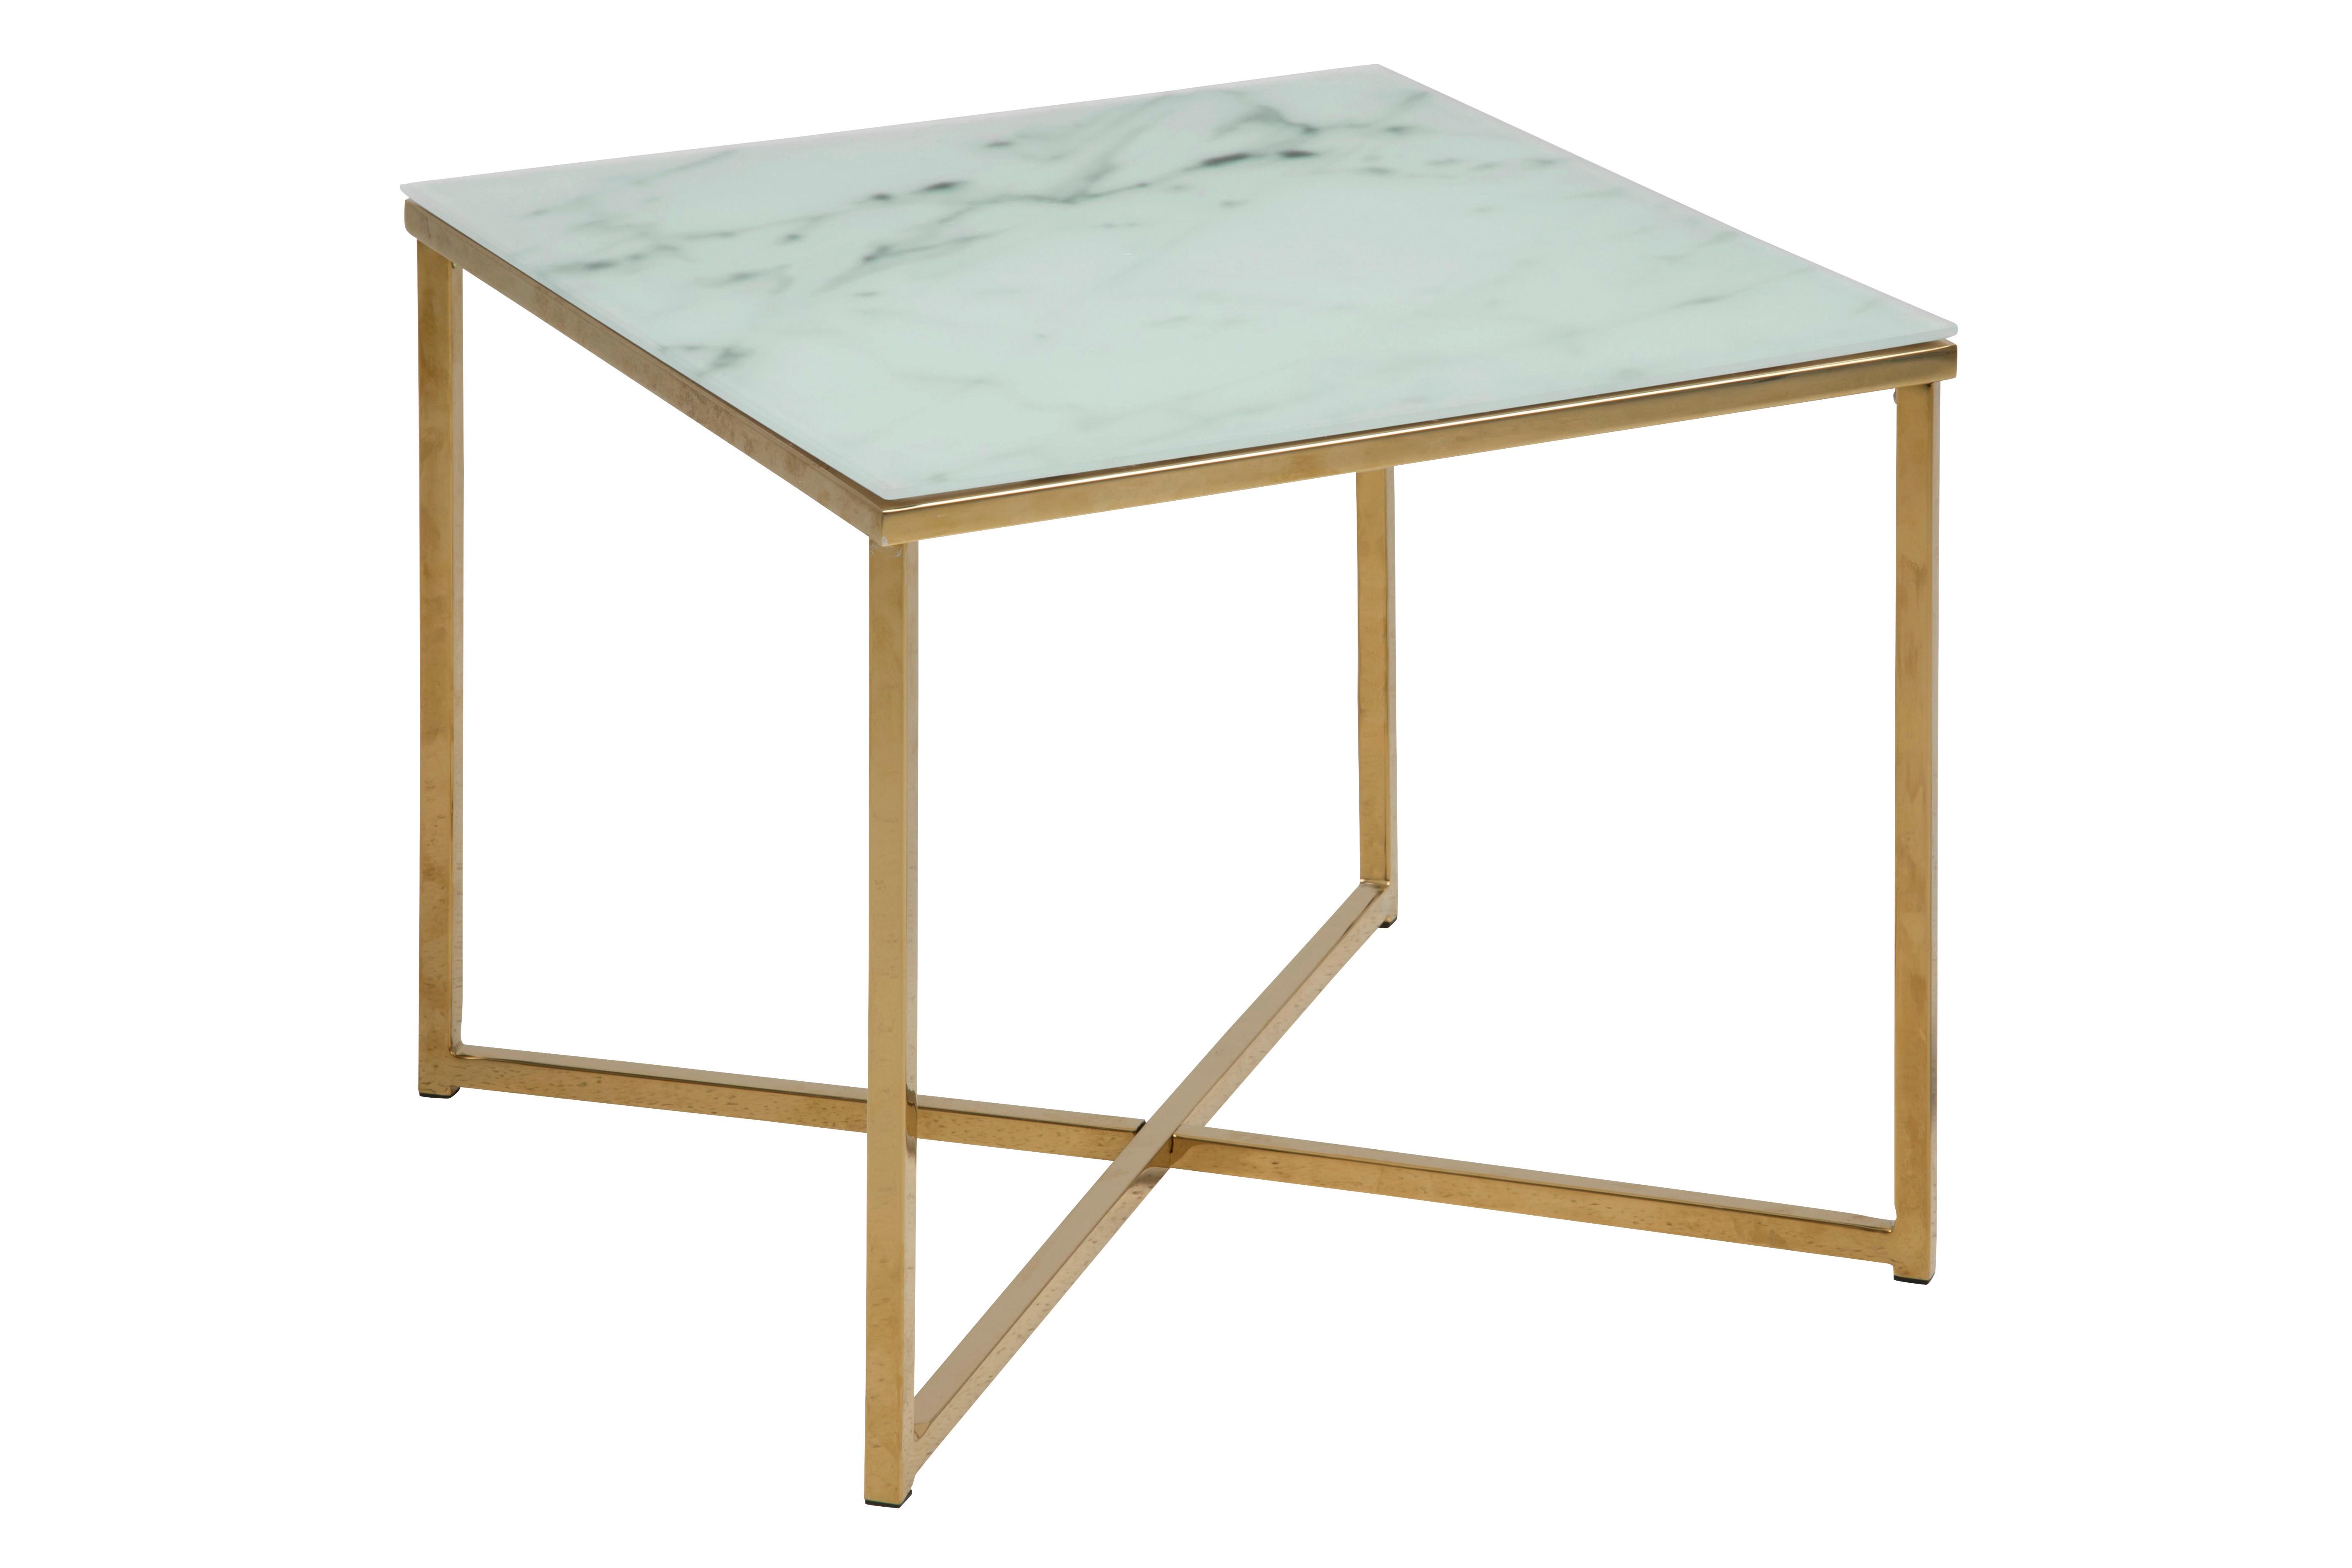 Konferenční Stolek Alisma - bílá/barvy zlata, Design, kov/sklo (50/42/50cm)